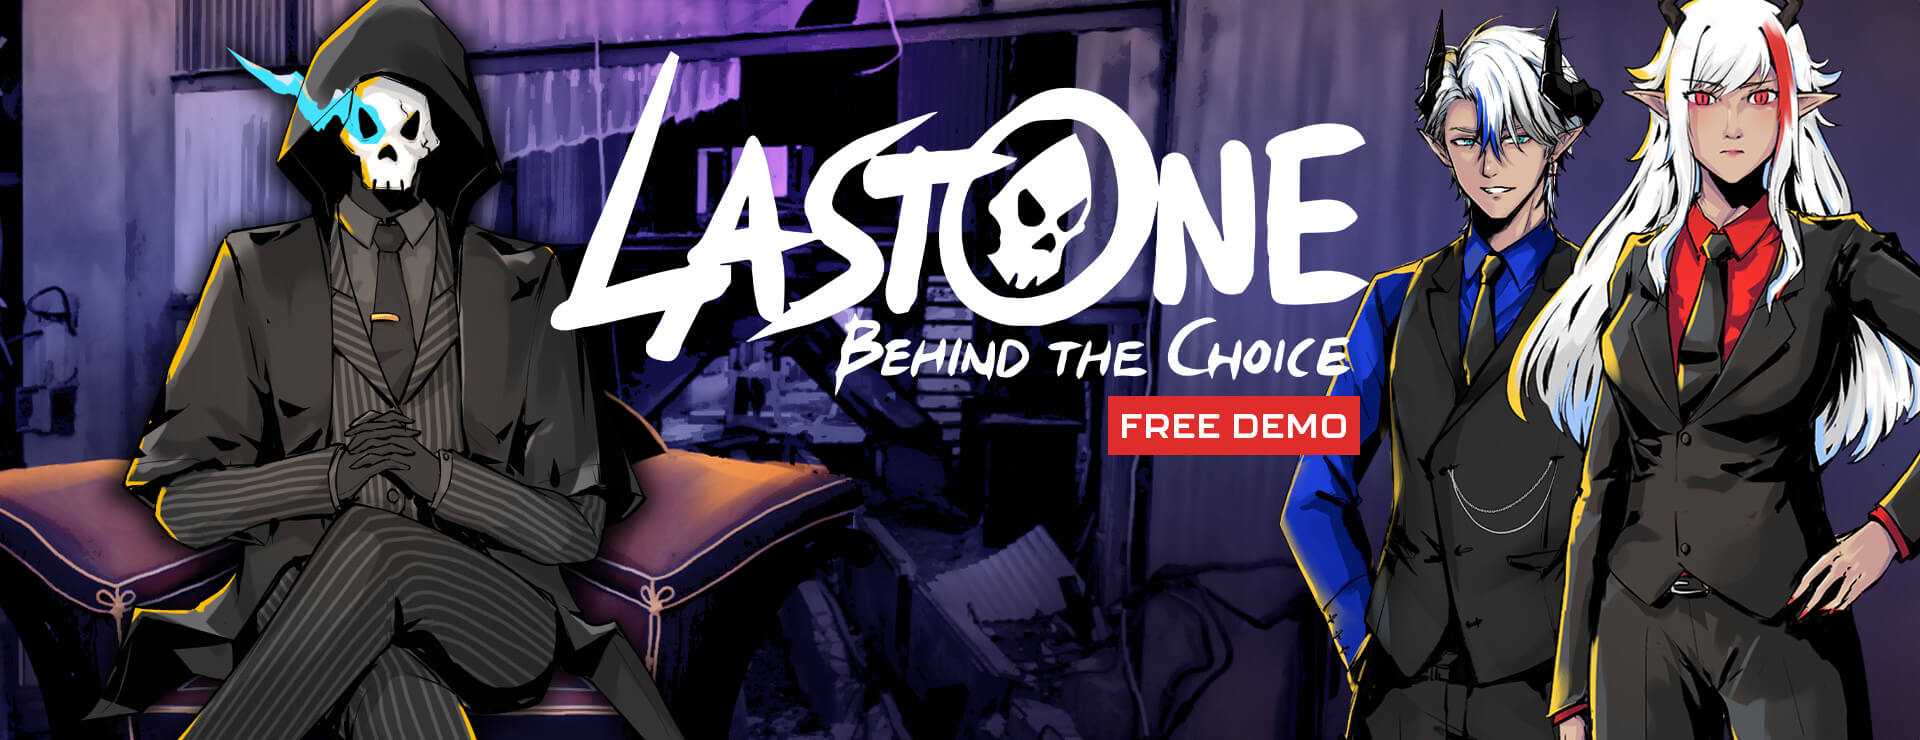 Lastone: Behind the Choice Demo - Visual Novel Game